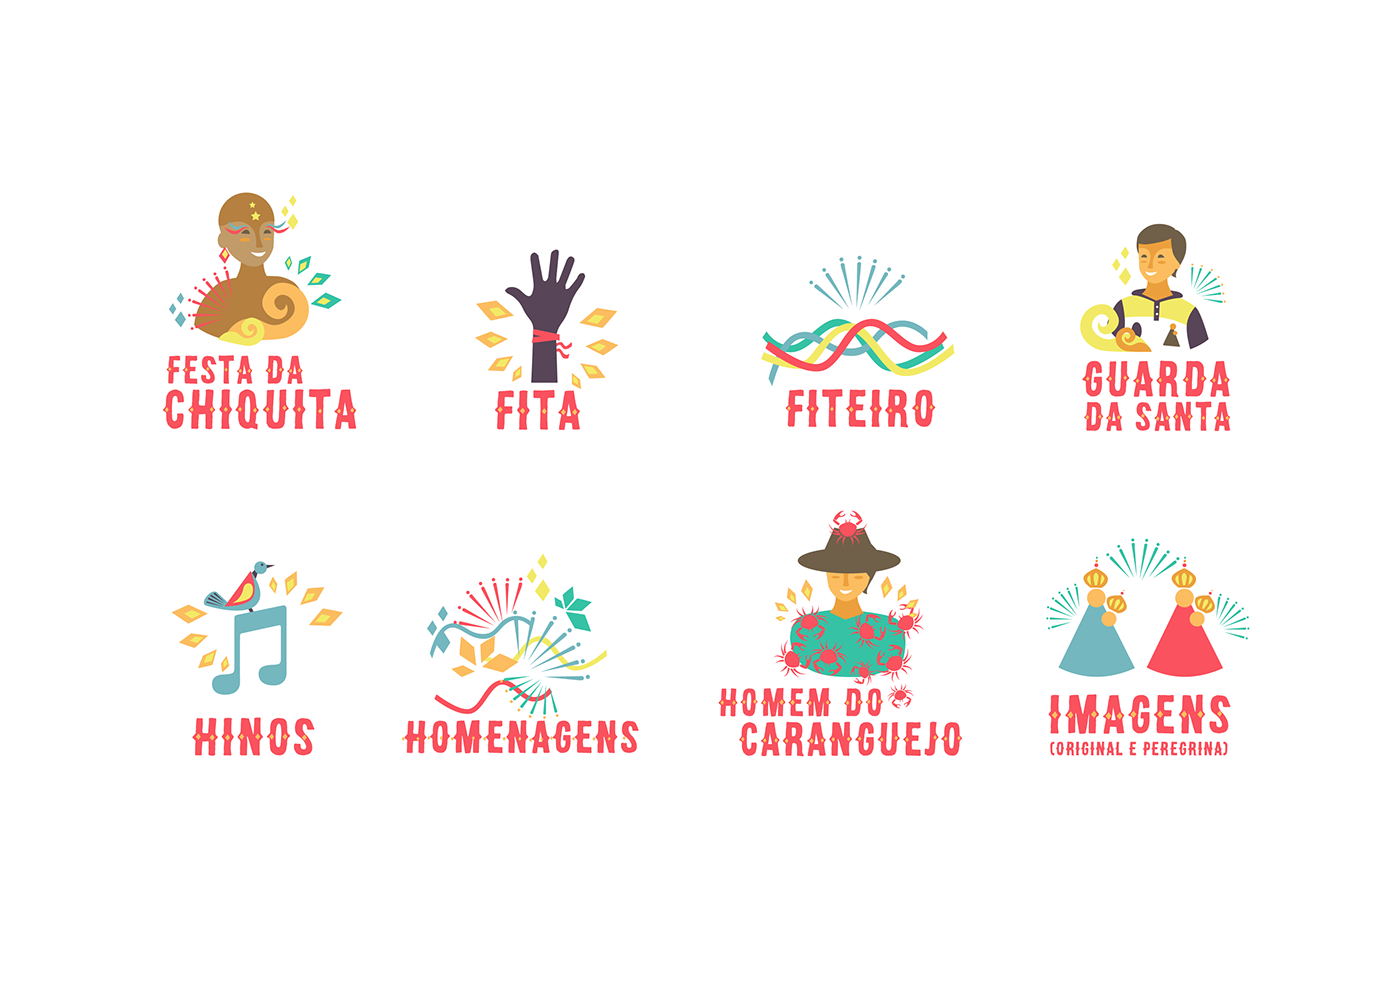 Círio para Ilustração amazonia Amazon Brasil Brazil branding  marca comemorativa belém